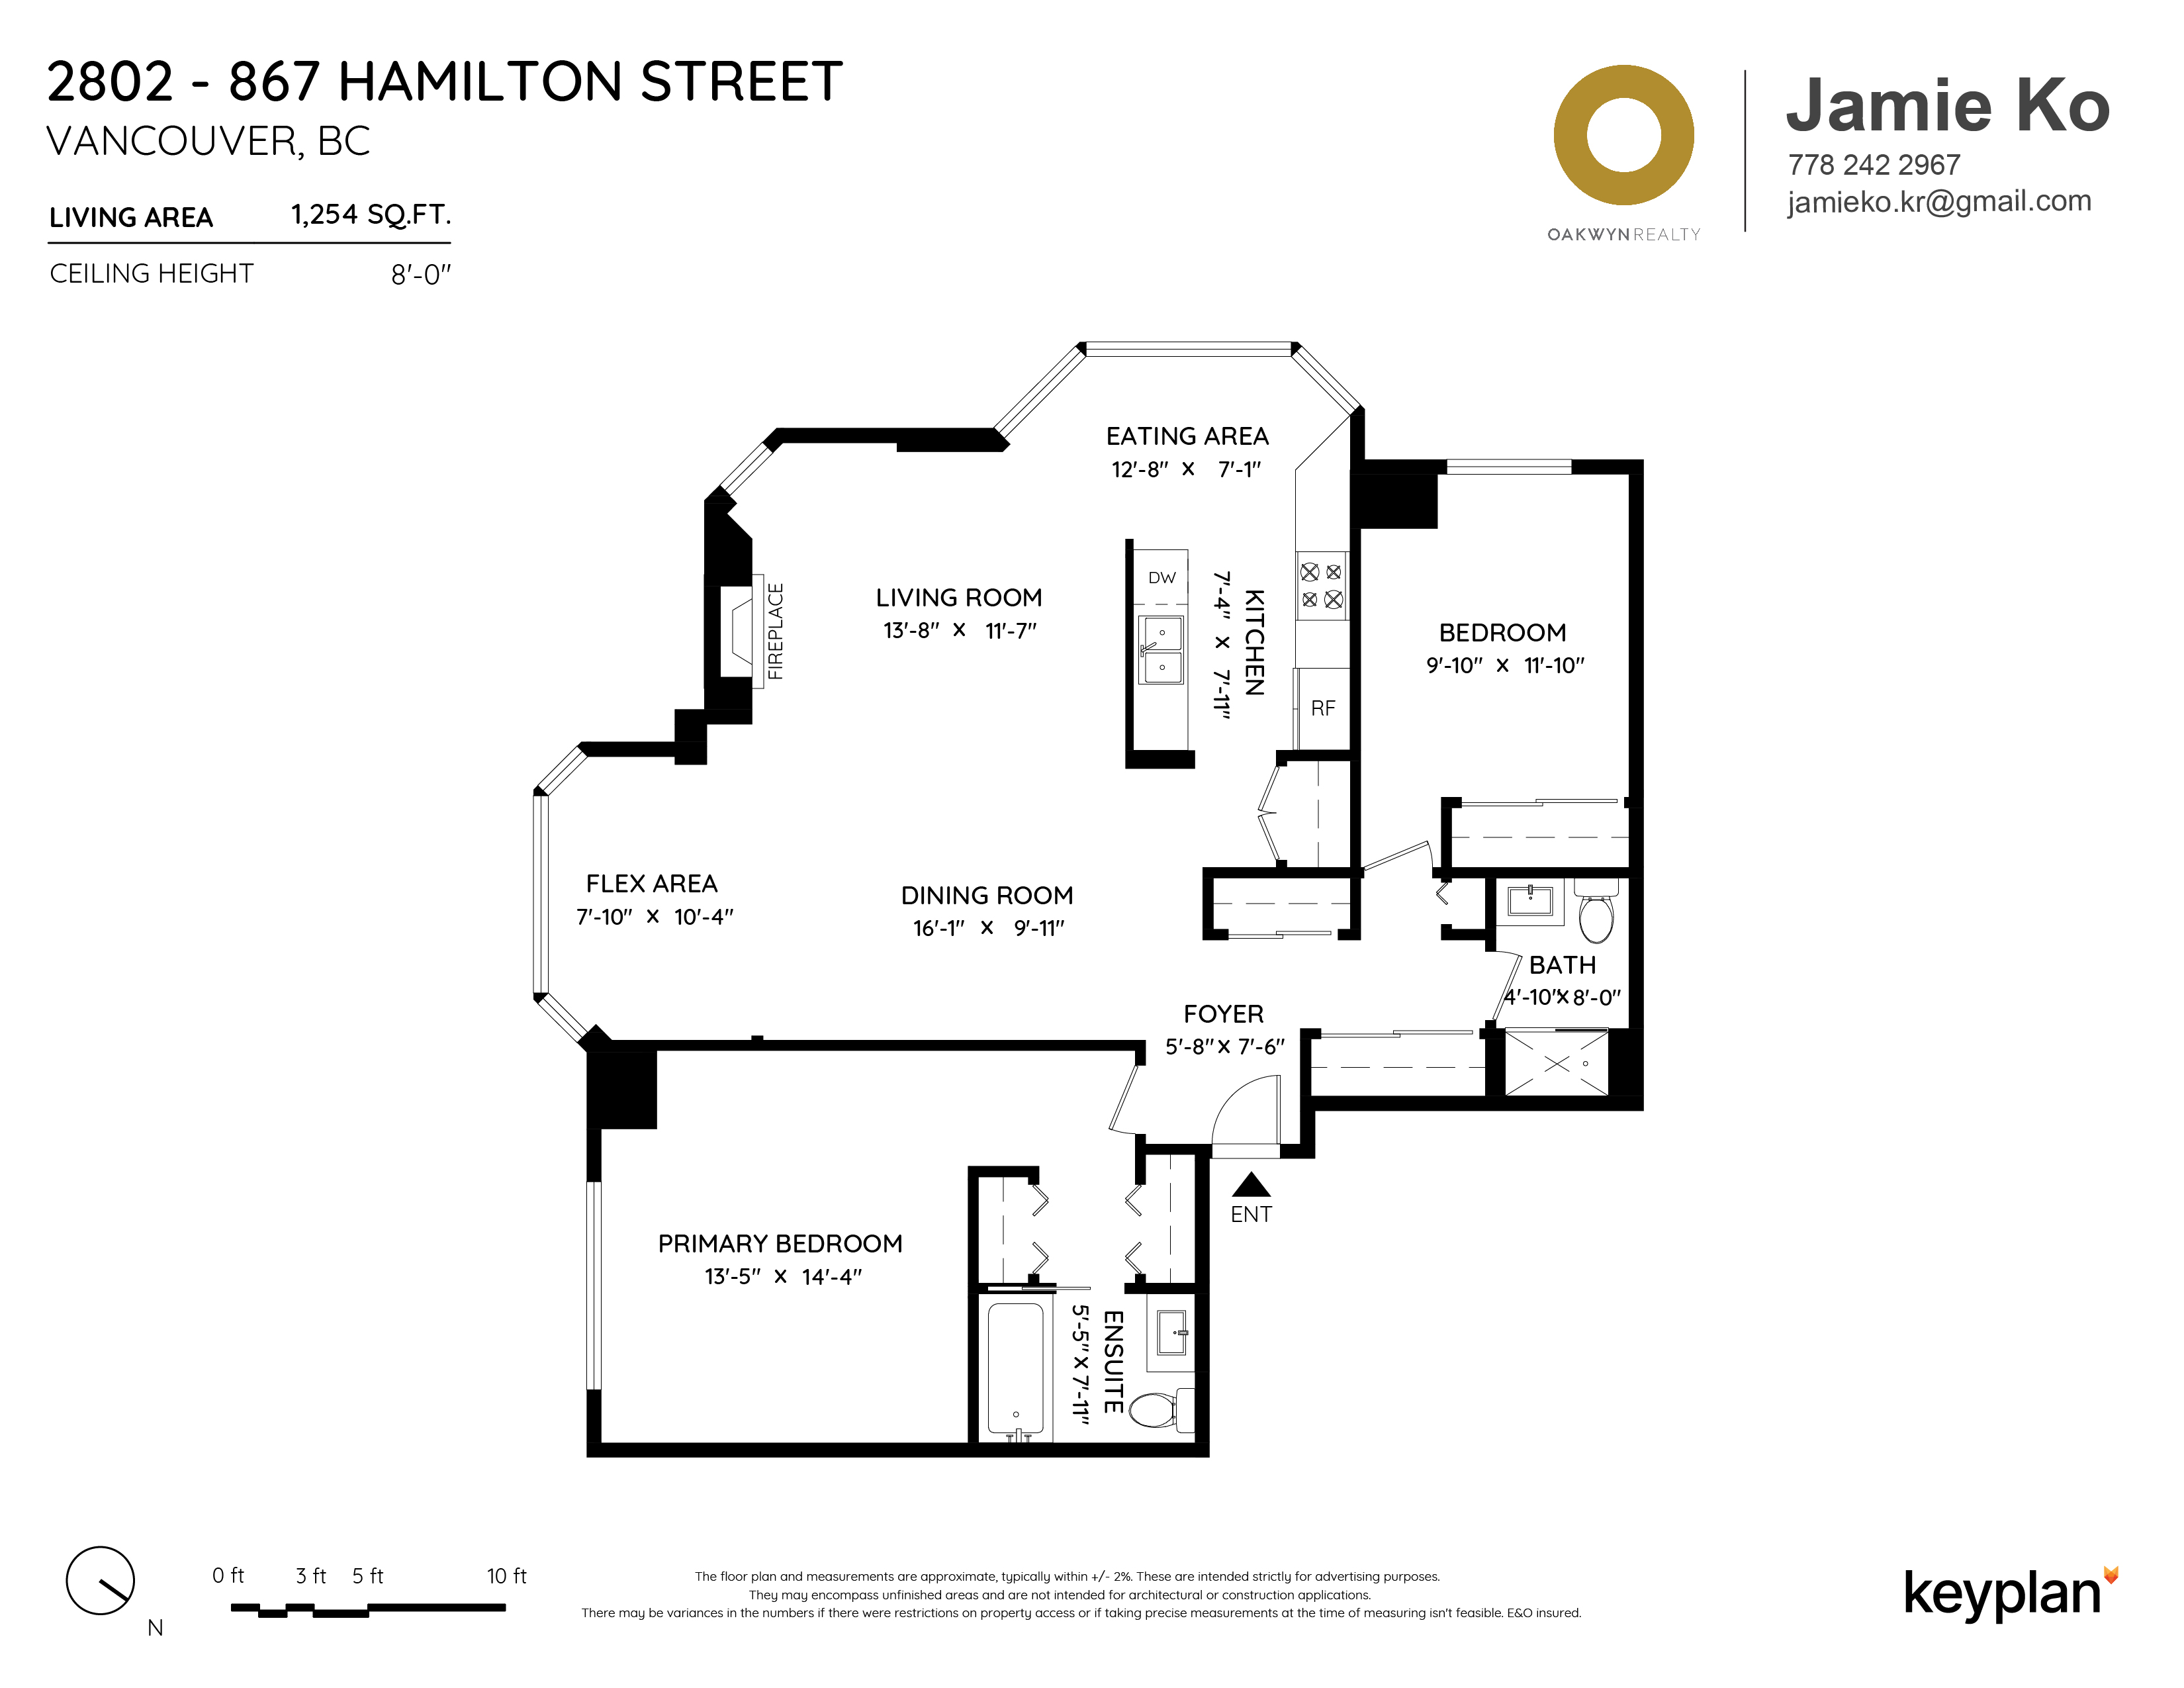 Jamie Ko - Unit 2802 - 867 Hamilton Street, Vancouver, BC, Canada | Floor Plan 1